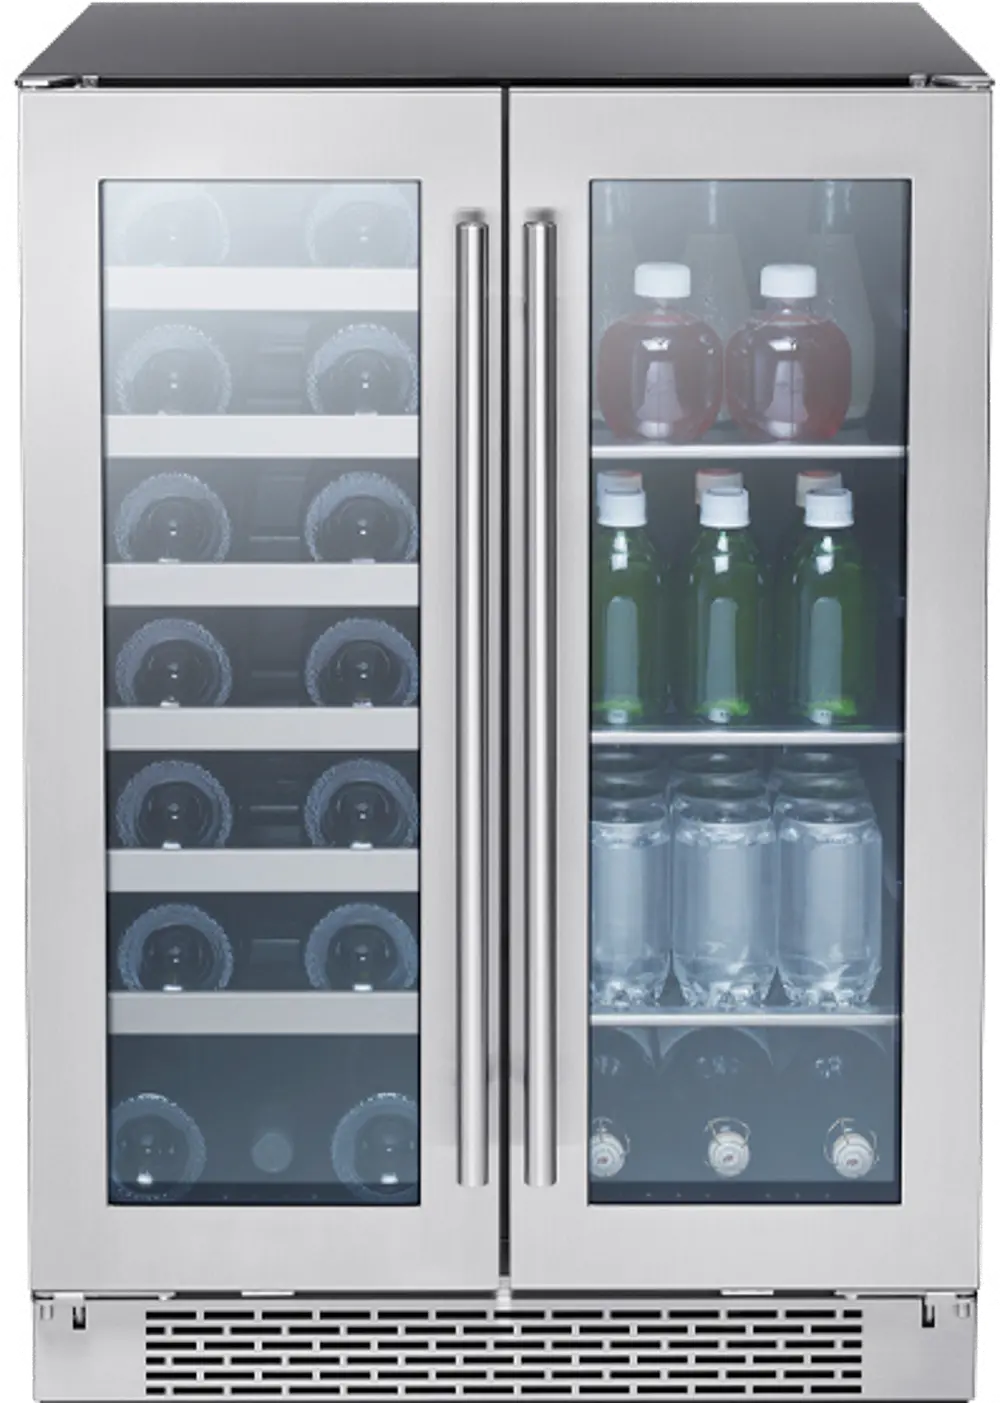 PRWB24C32BG Zephyr Presrv Dual Zone Wine and Beverage Refrigerator - Stainless Steel-1